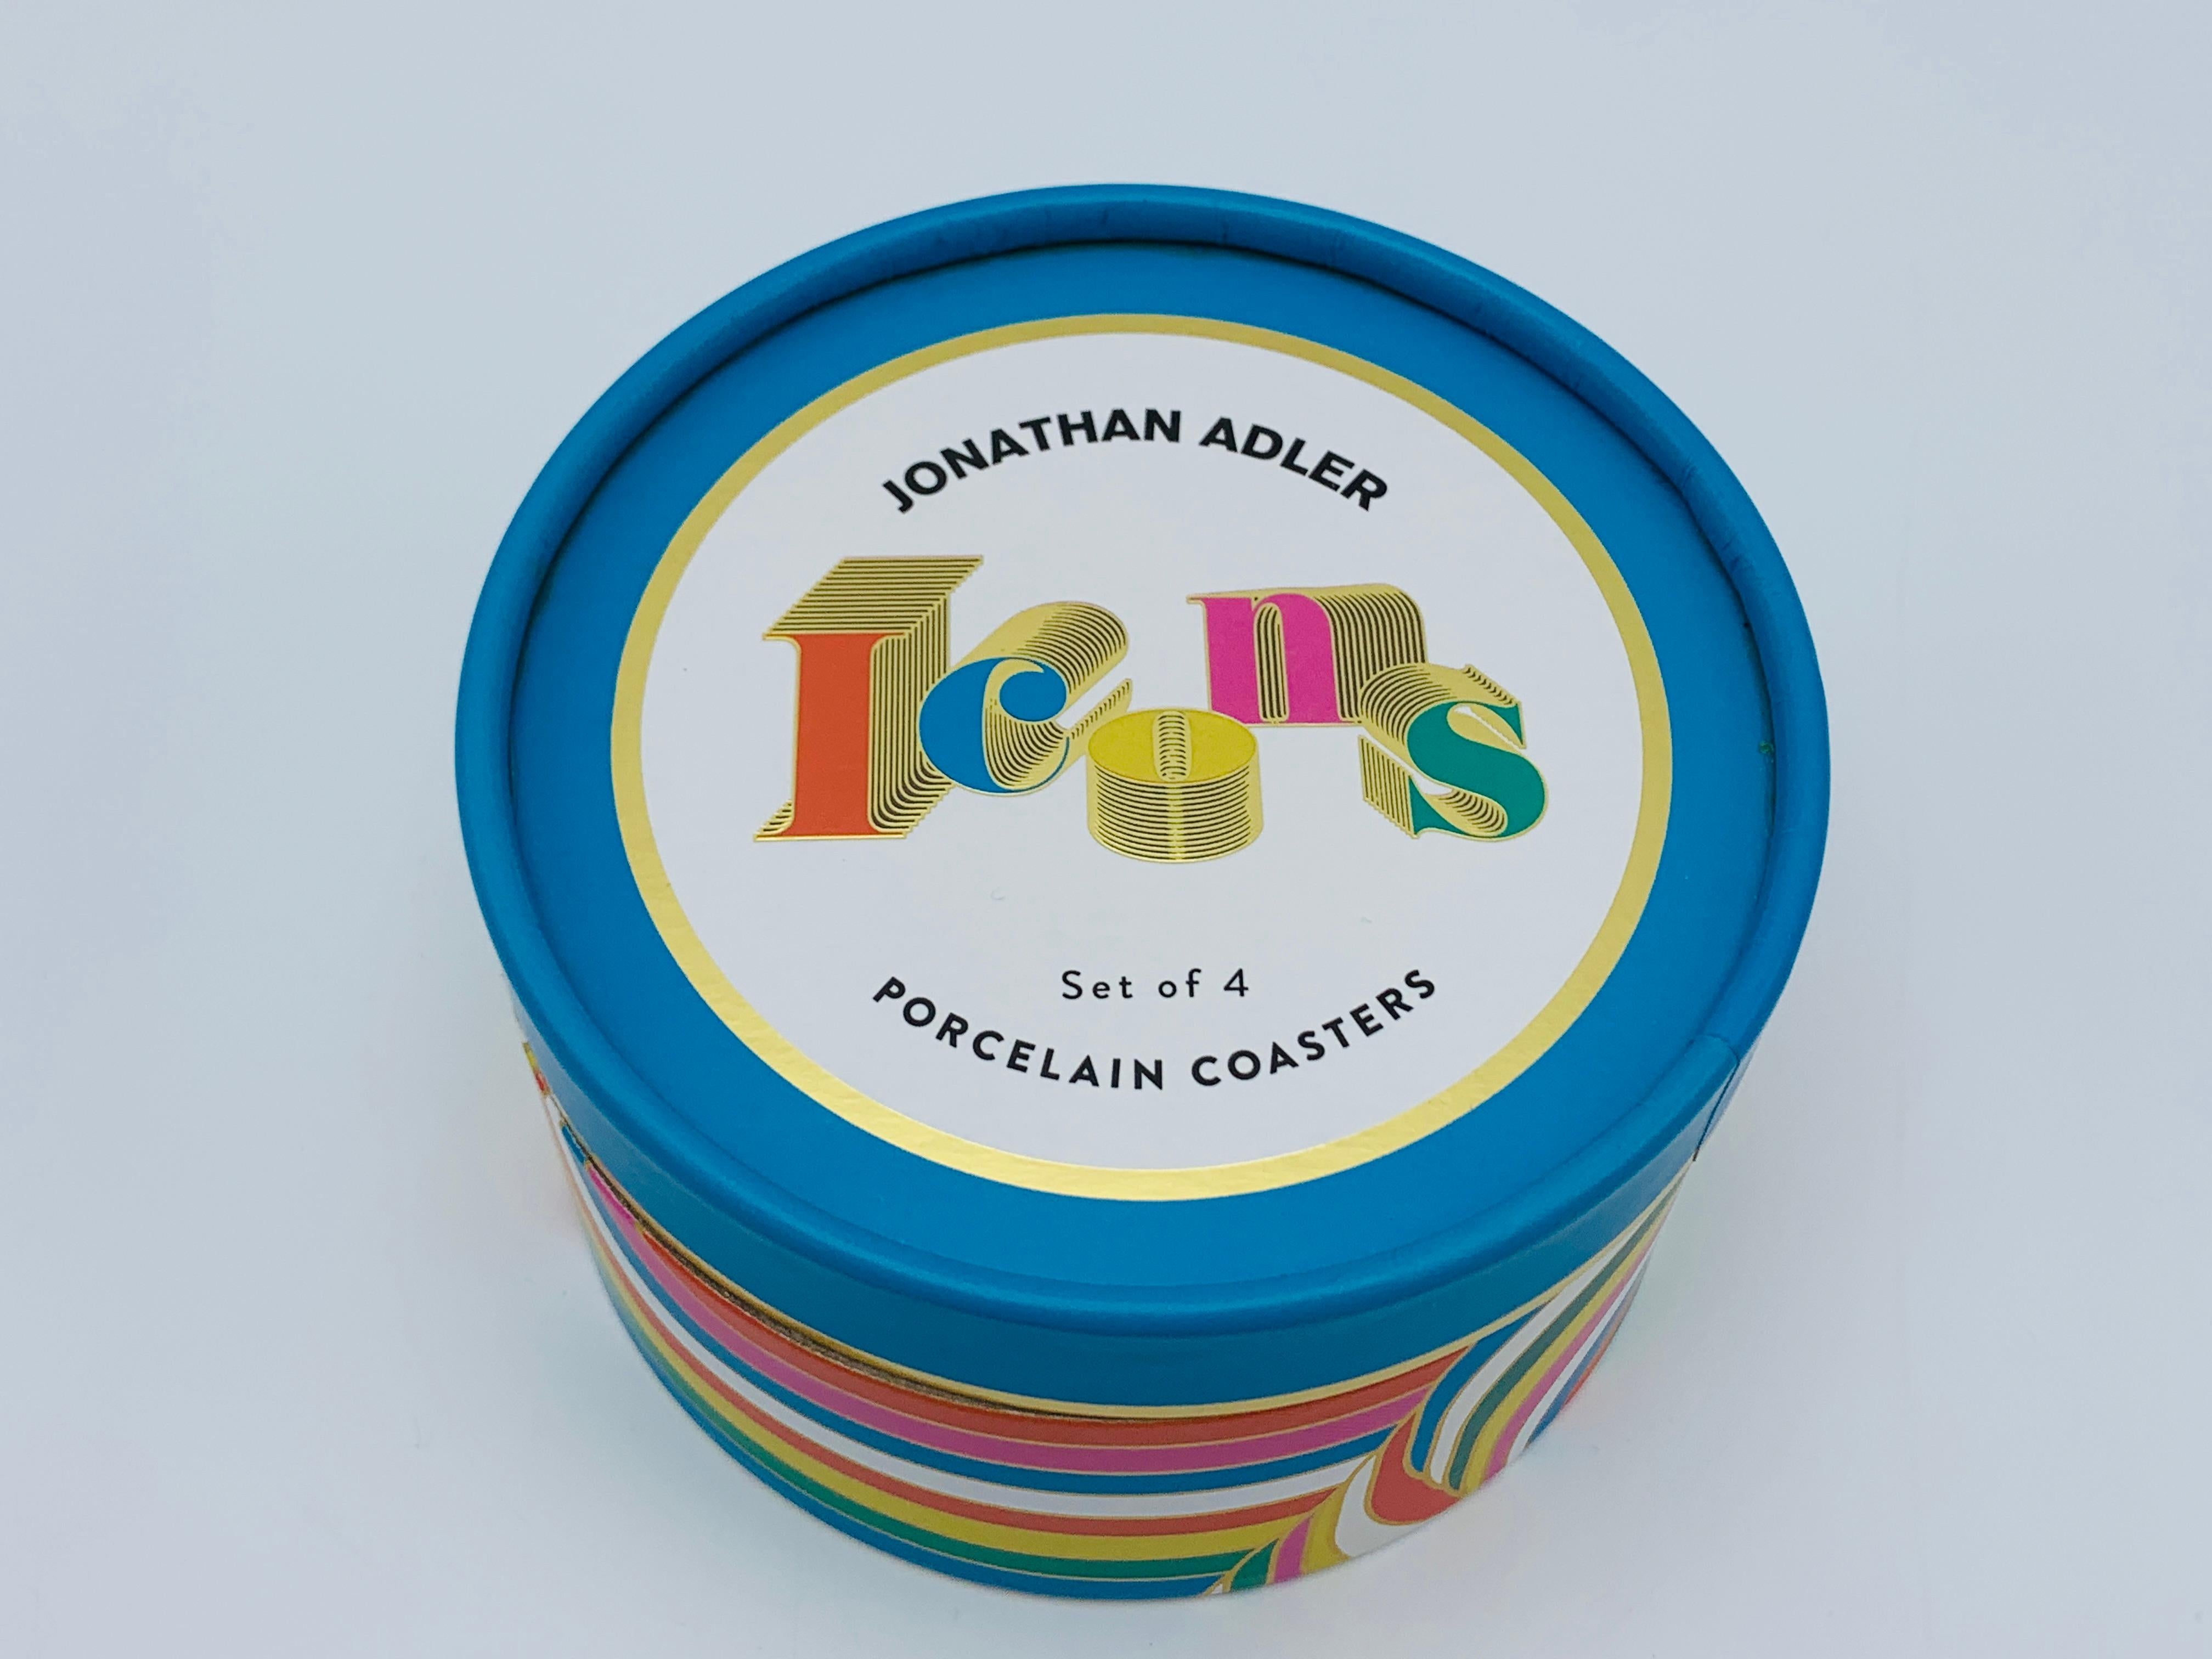 Jonathan Adler 'Icons' Porcelain Coasters, Set of 4 For Sale 2